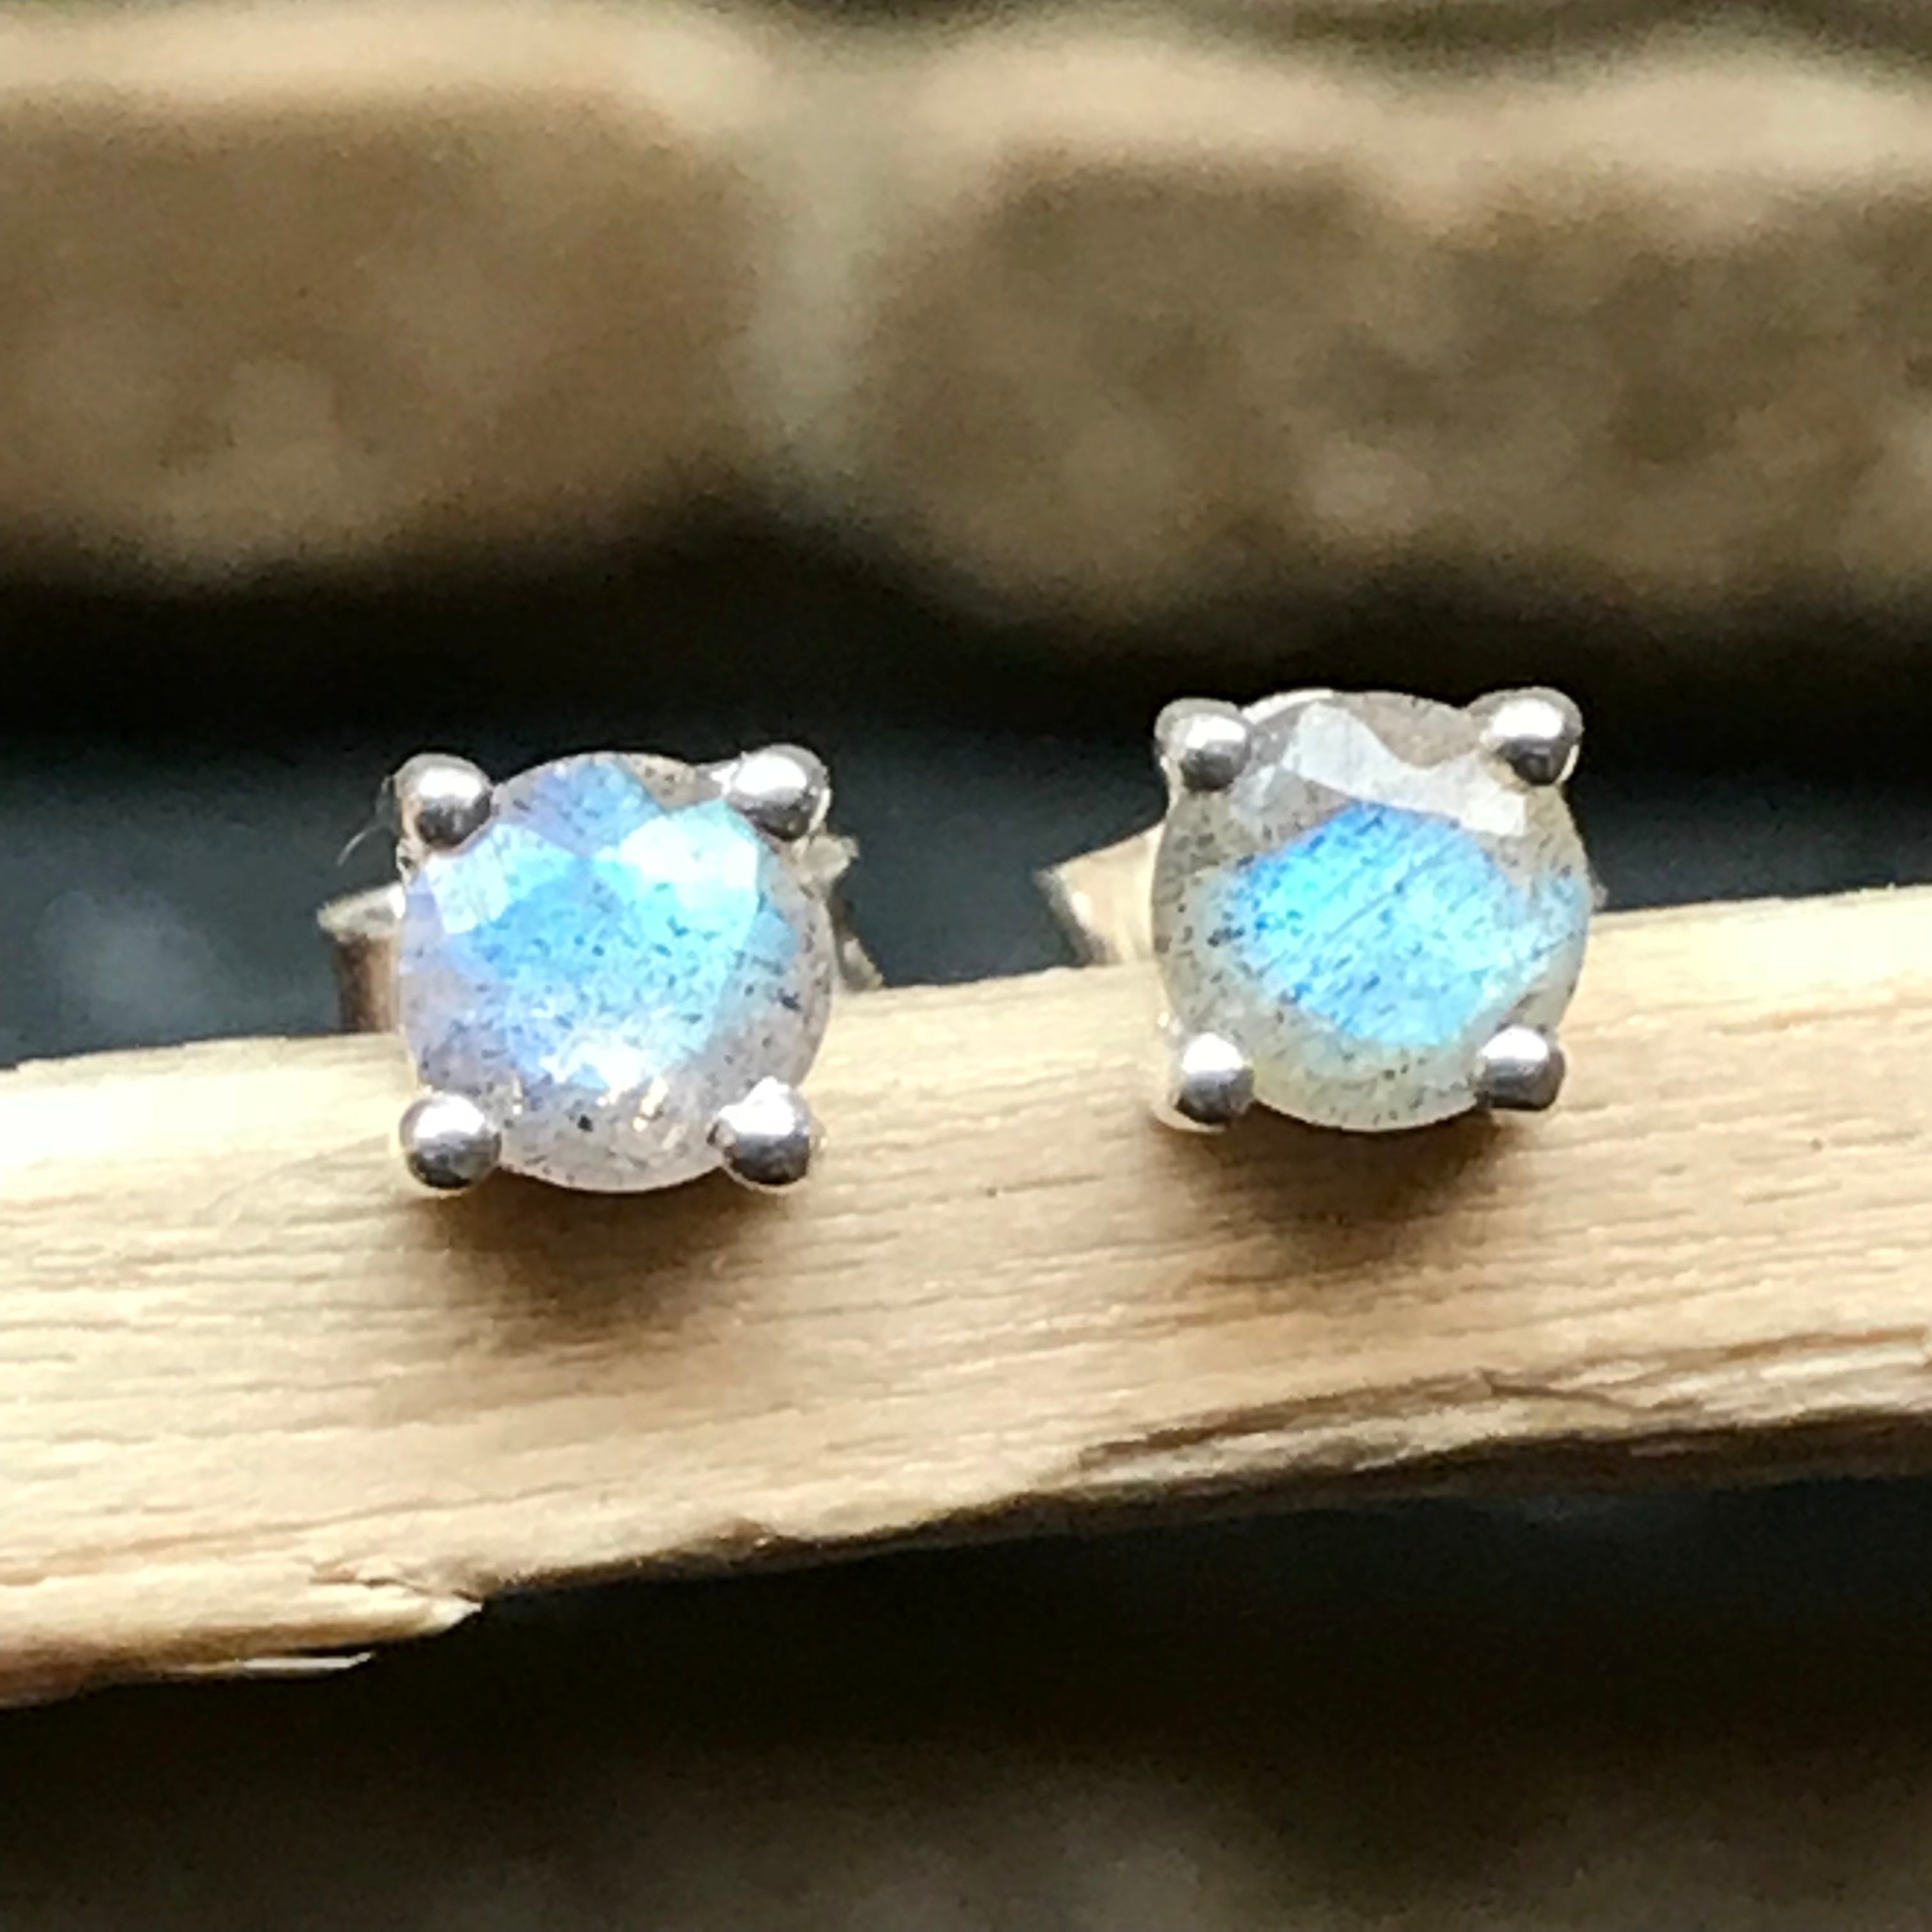 Natural Blue Labradorite 925 Sterling Silver Earrings 4mm - Natural Rocks by Kala